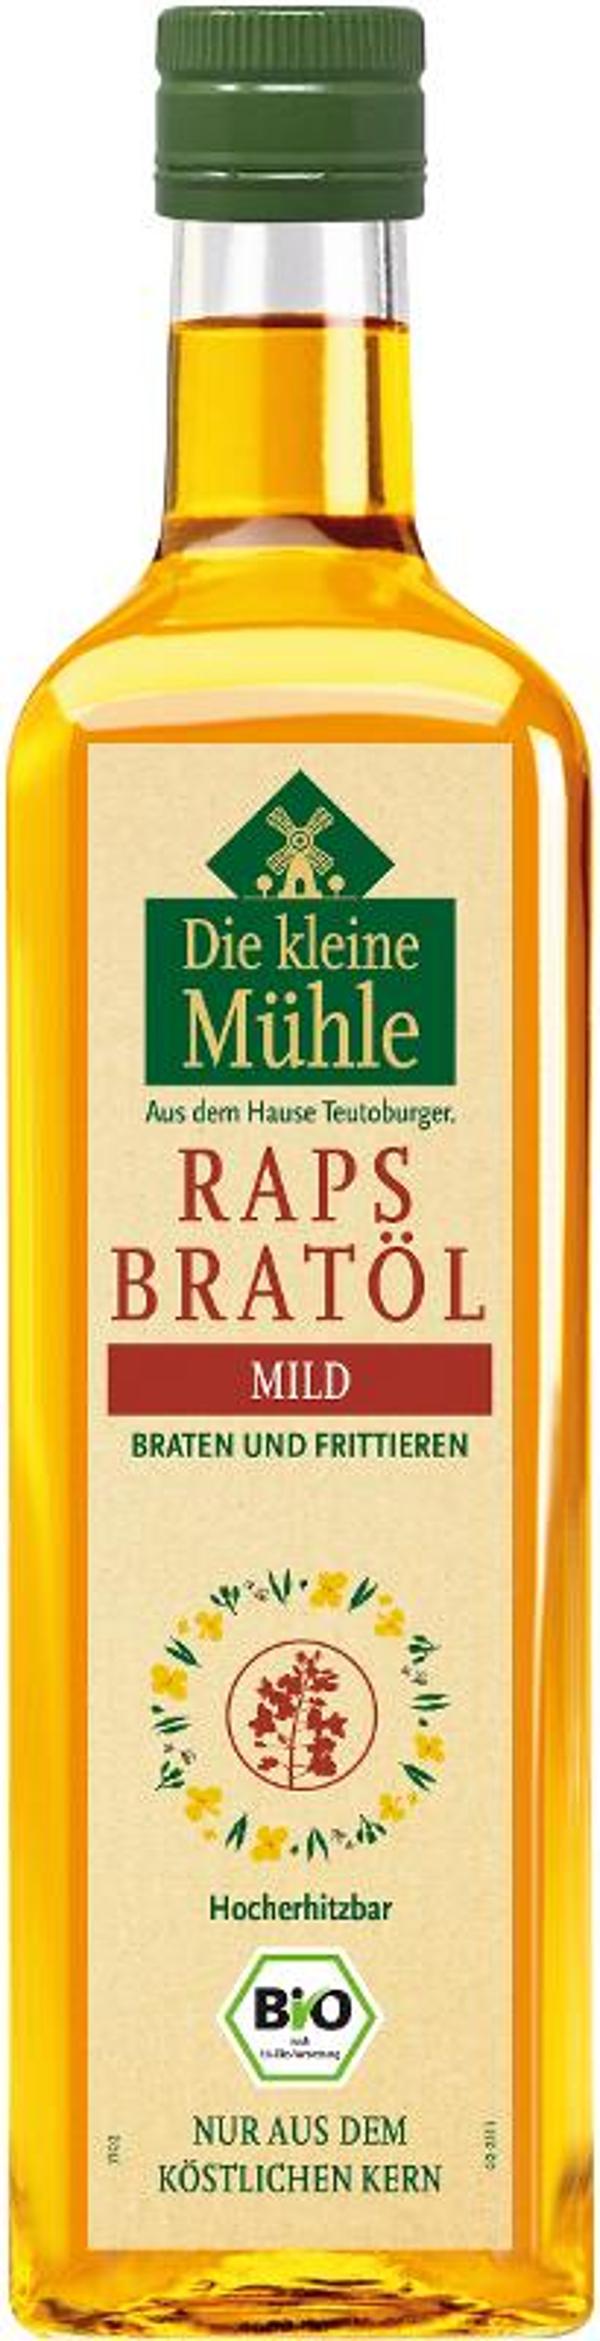 Produktfoto zu Raps Bratöl mild 750ml